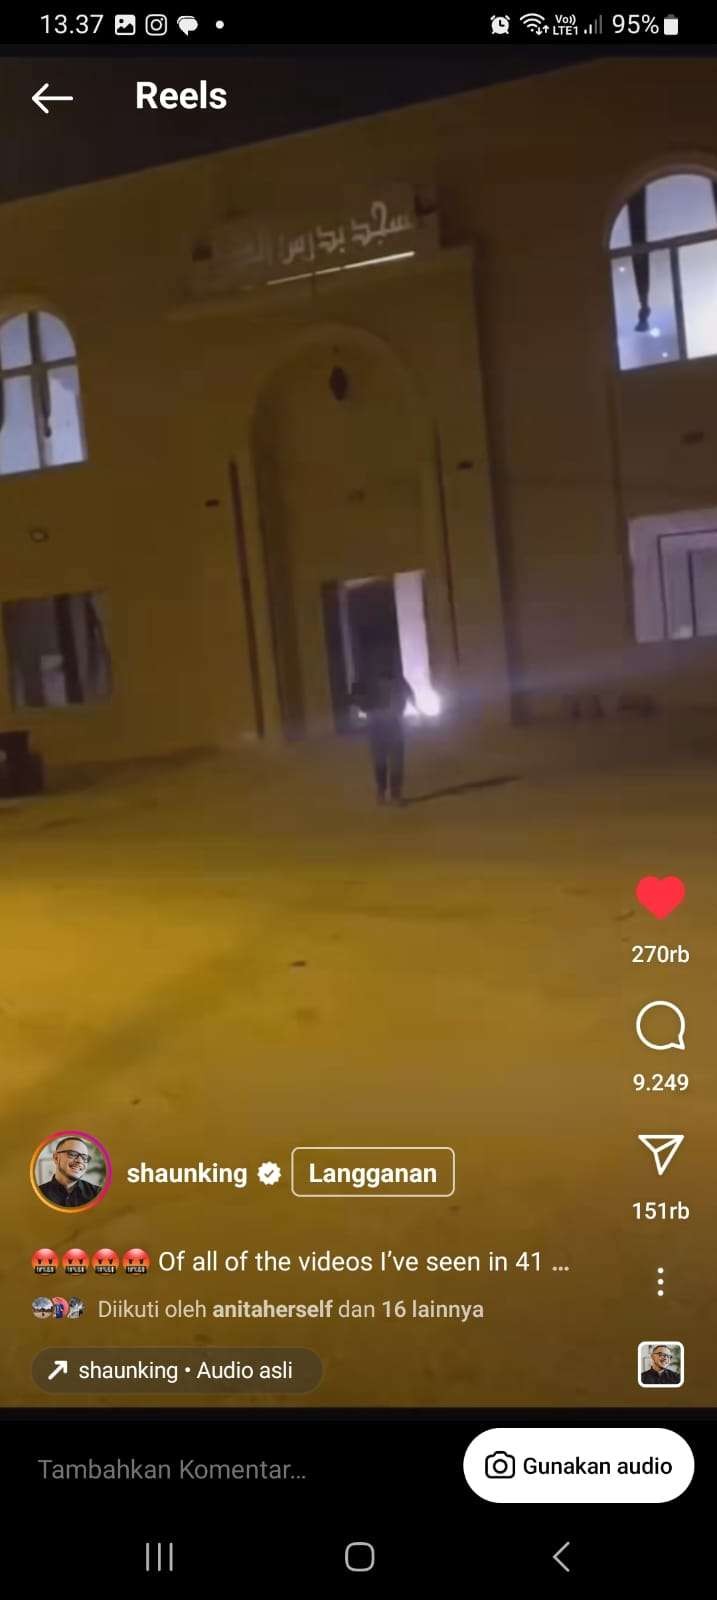 Potongan video seorang tentara Israel sedang melempar granat ke dalam masjid saat azan Subuh, di Tepi Barat. (Foto: Instagram @Shaunking)